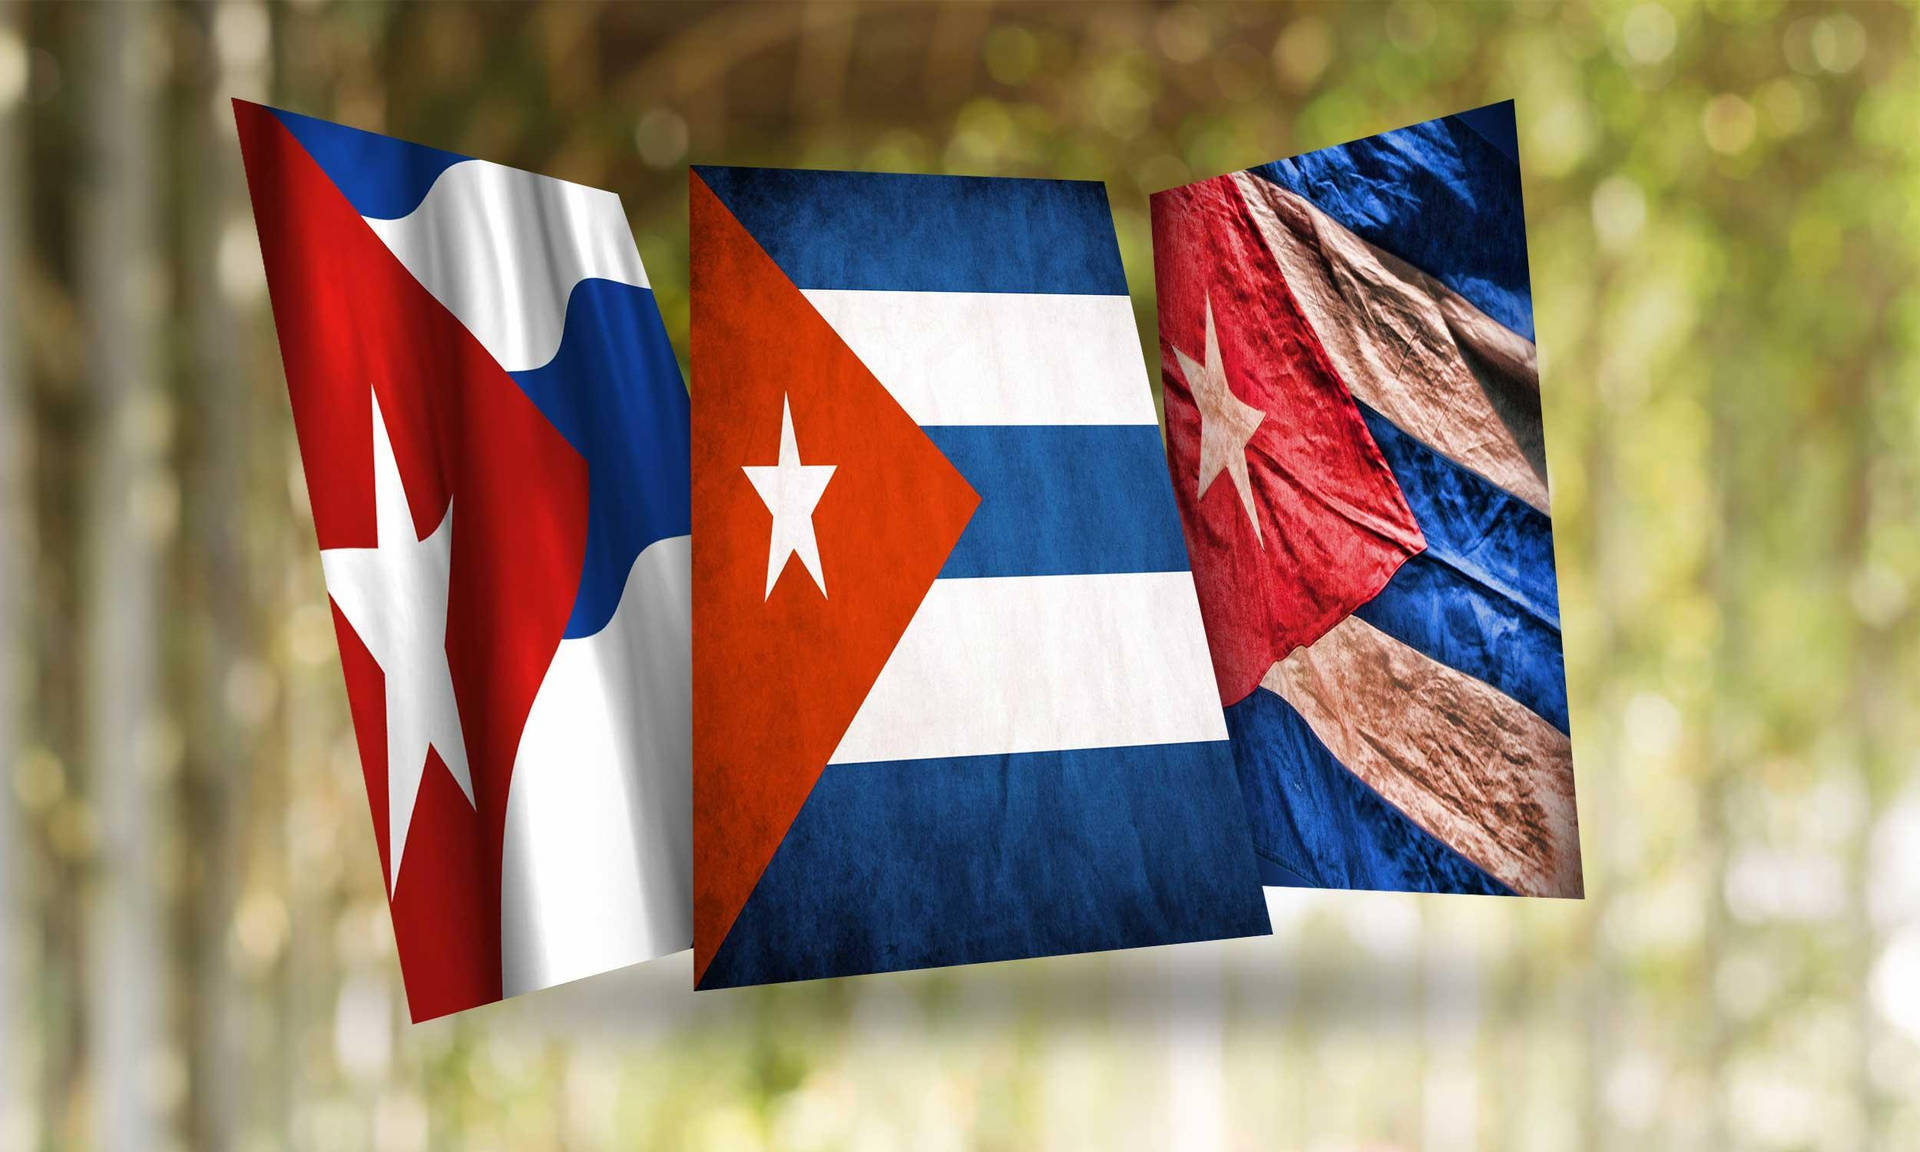 Cuban Flag Image Series